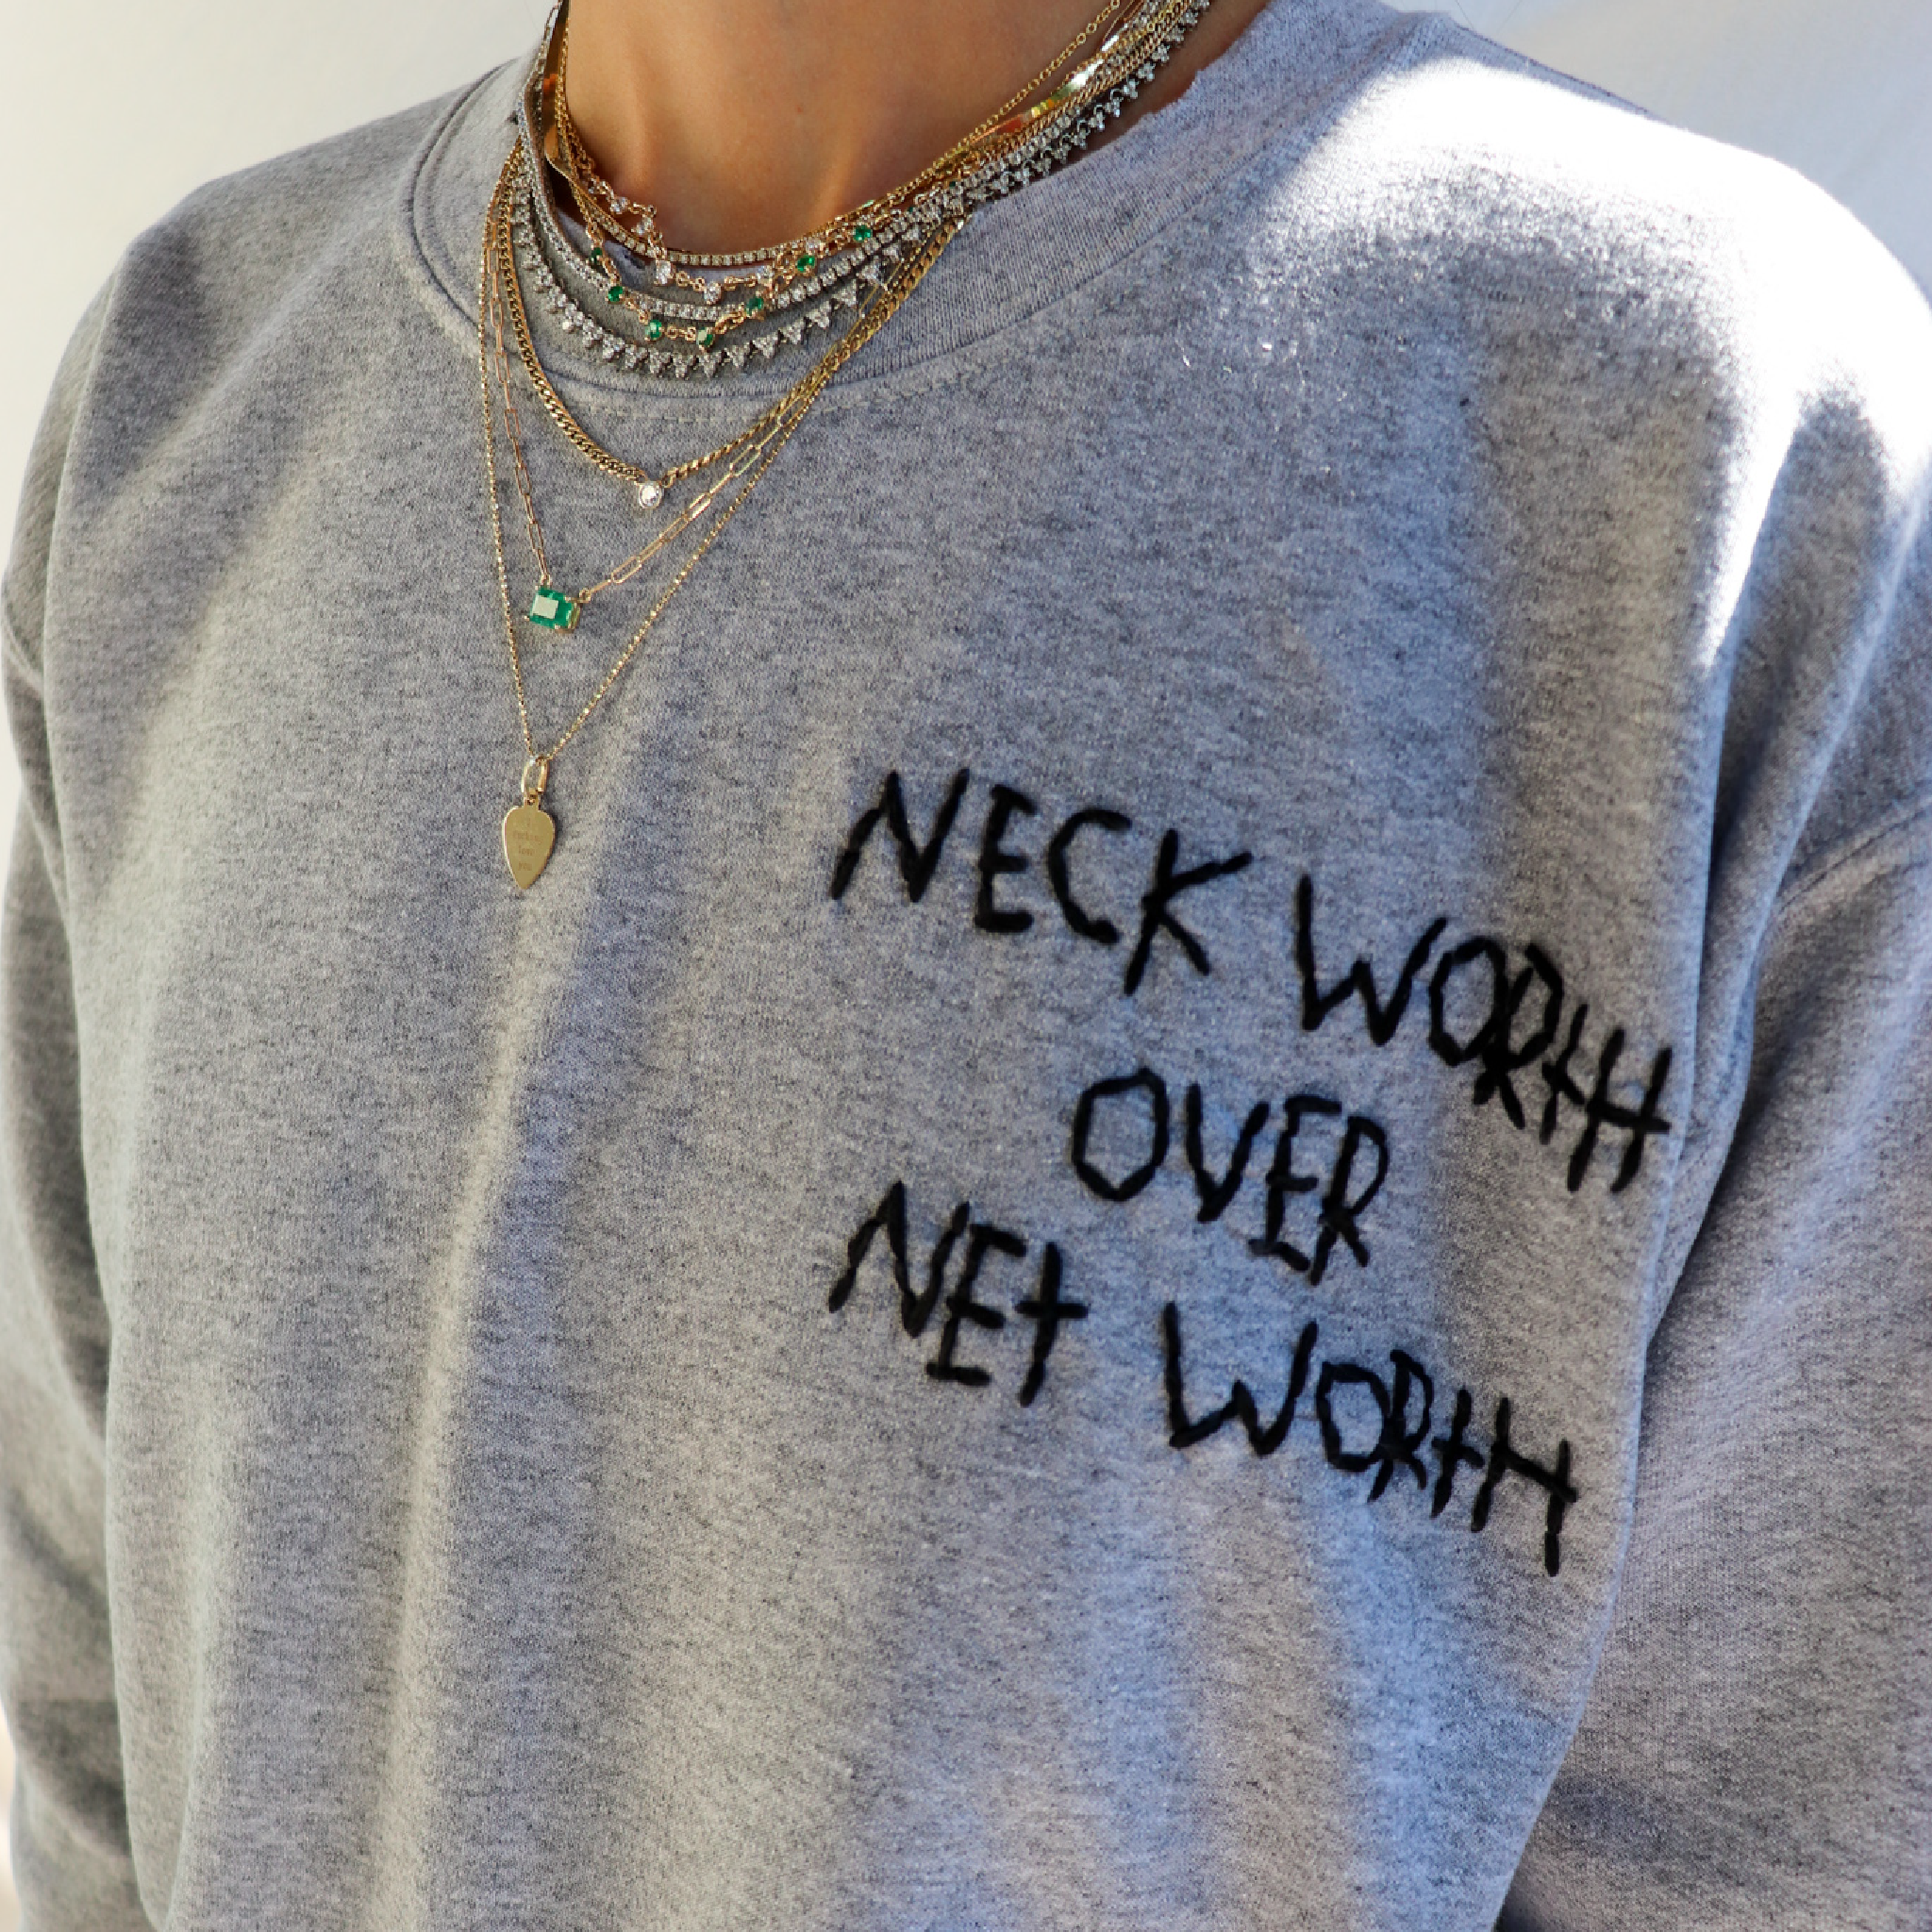 NECK WORTH OVER NET WORTH sweatshirt